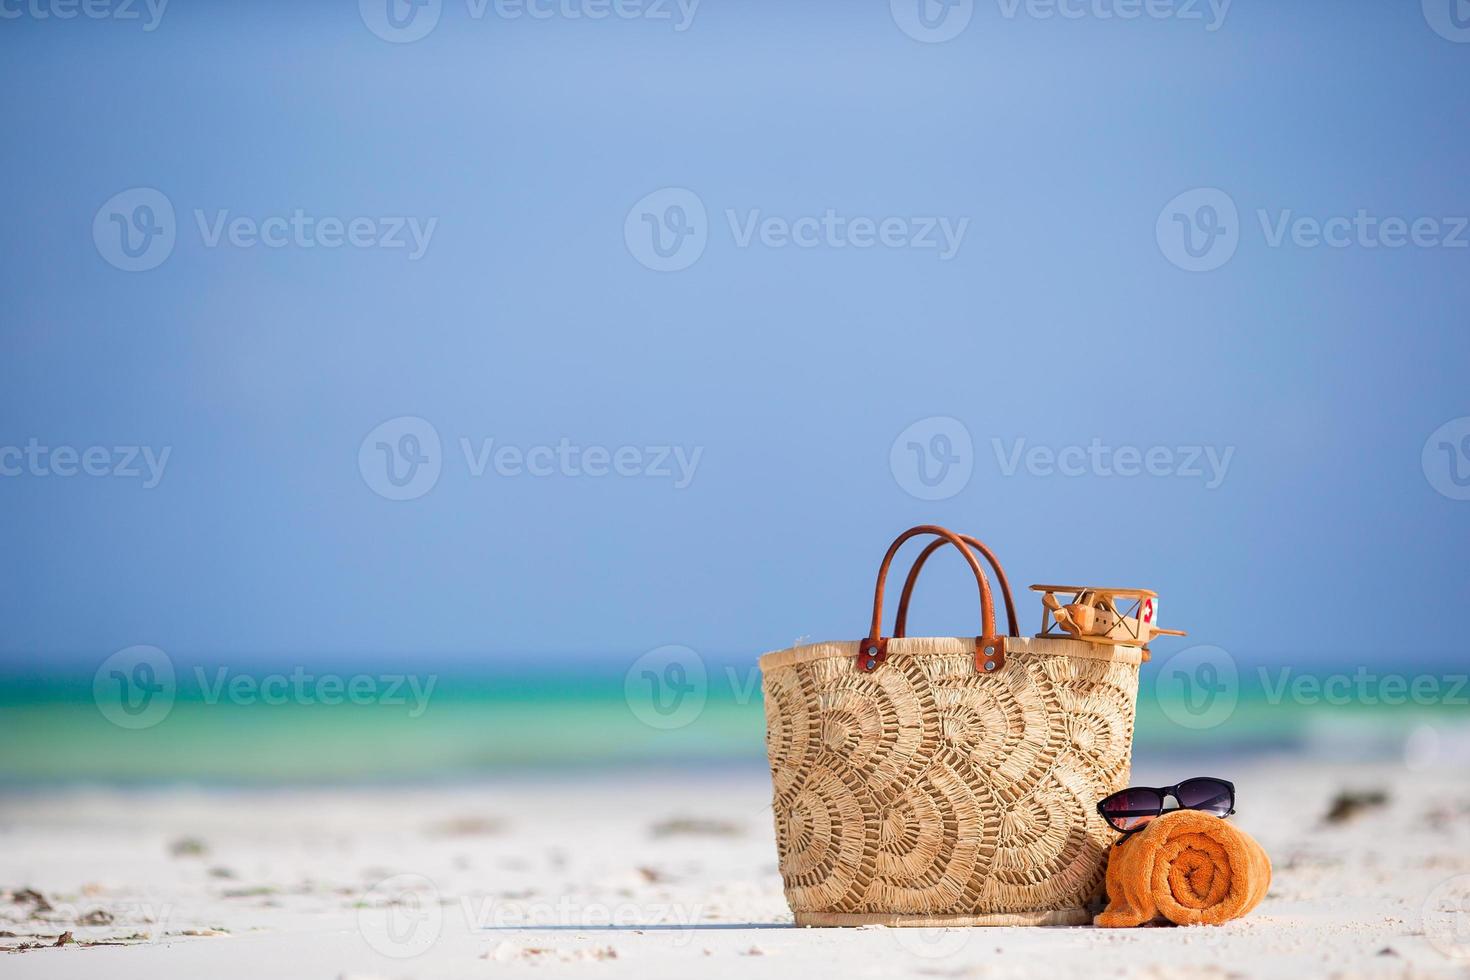 strandaccessoires - speelgoedvliegtuig, strozak, oranje handdoek en zonnebril op het strand foto